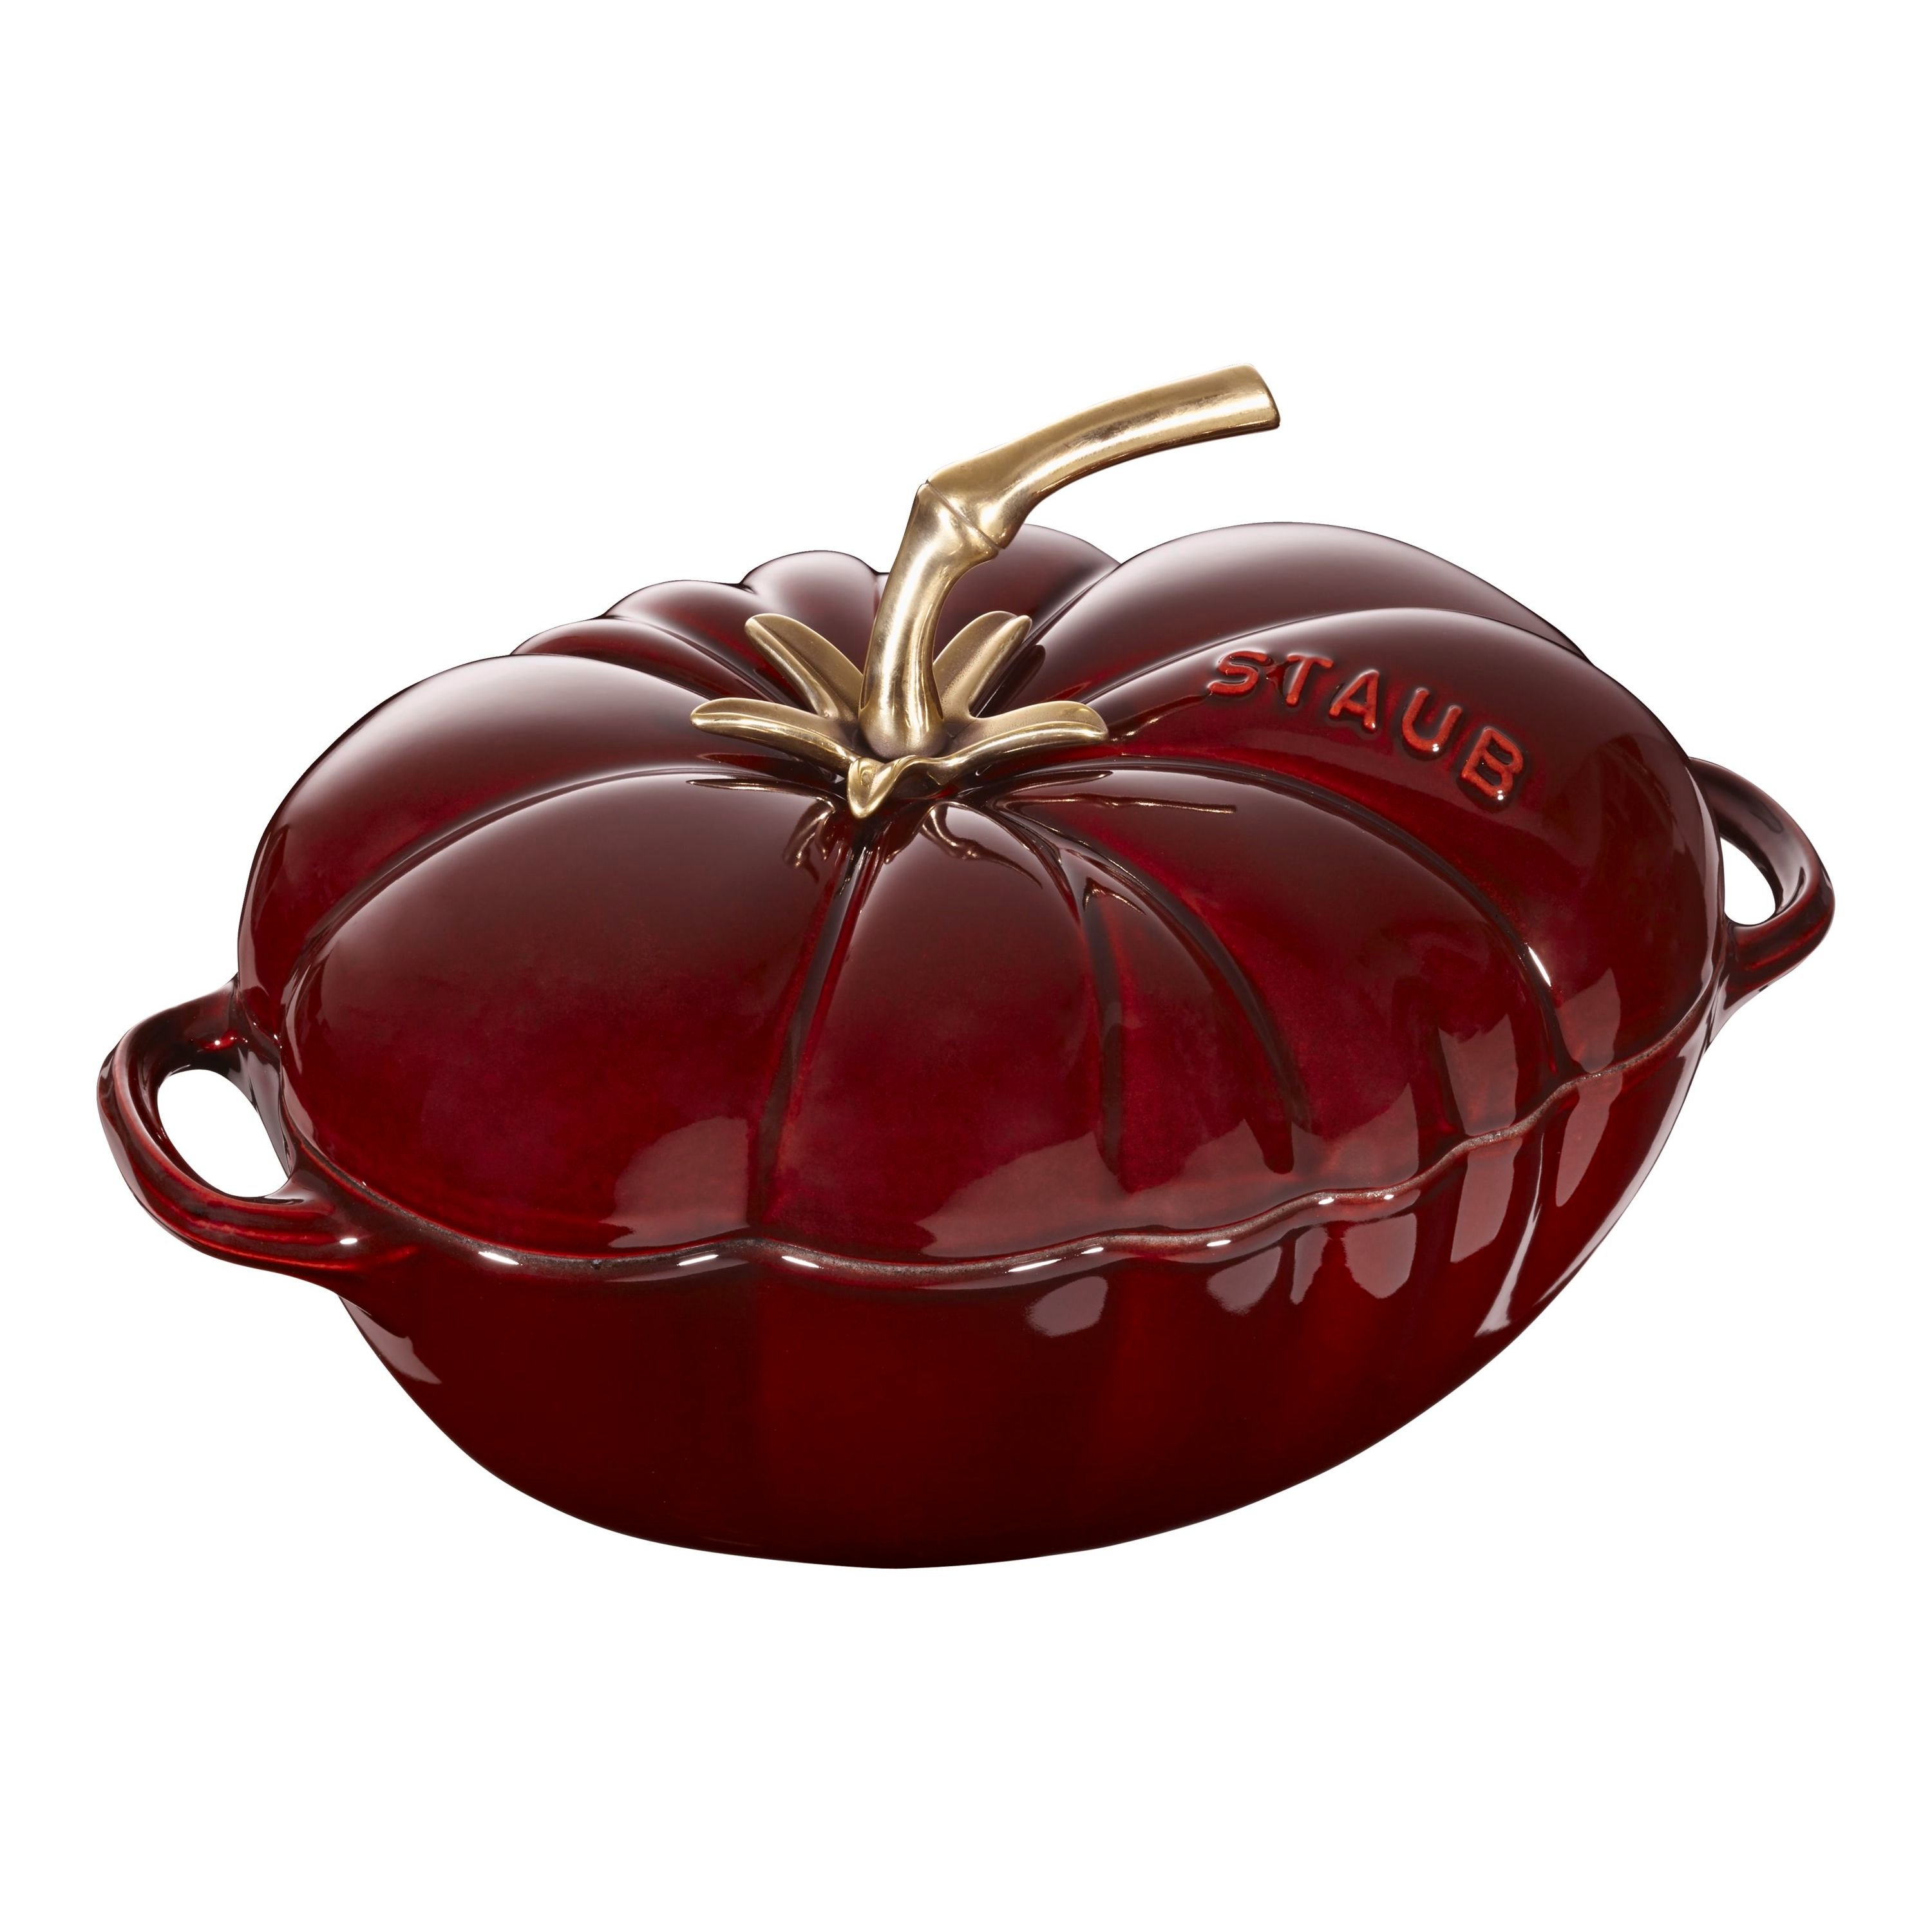 Limited Edition Casserole Tomato 2,5L Ø25cm, Red - Staub @ RoyalDesign